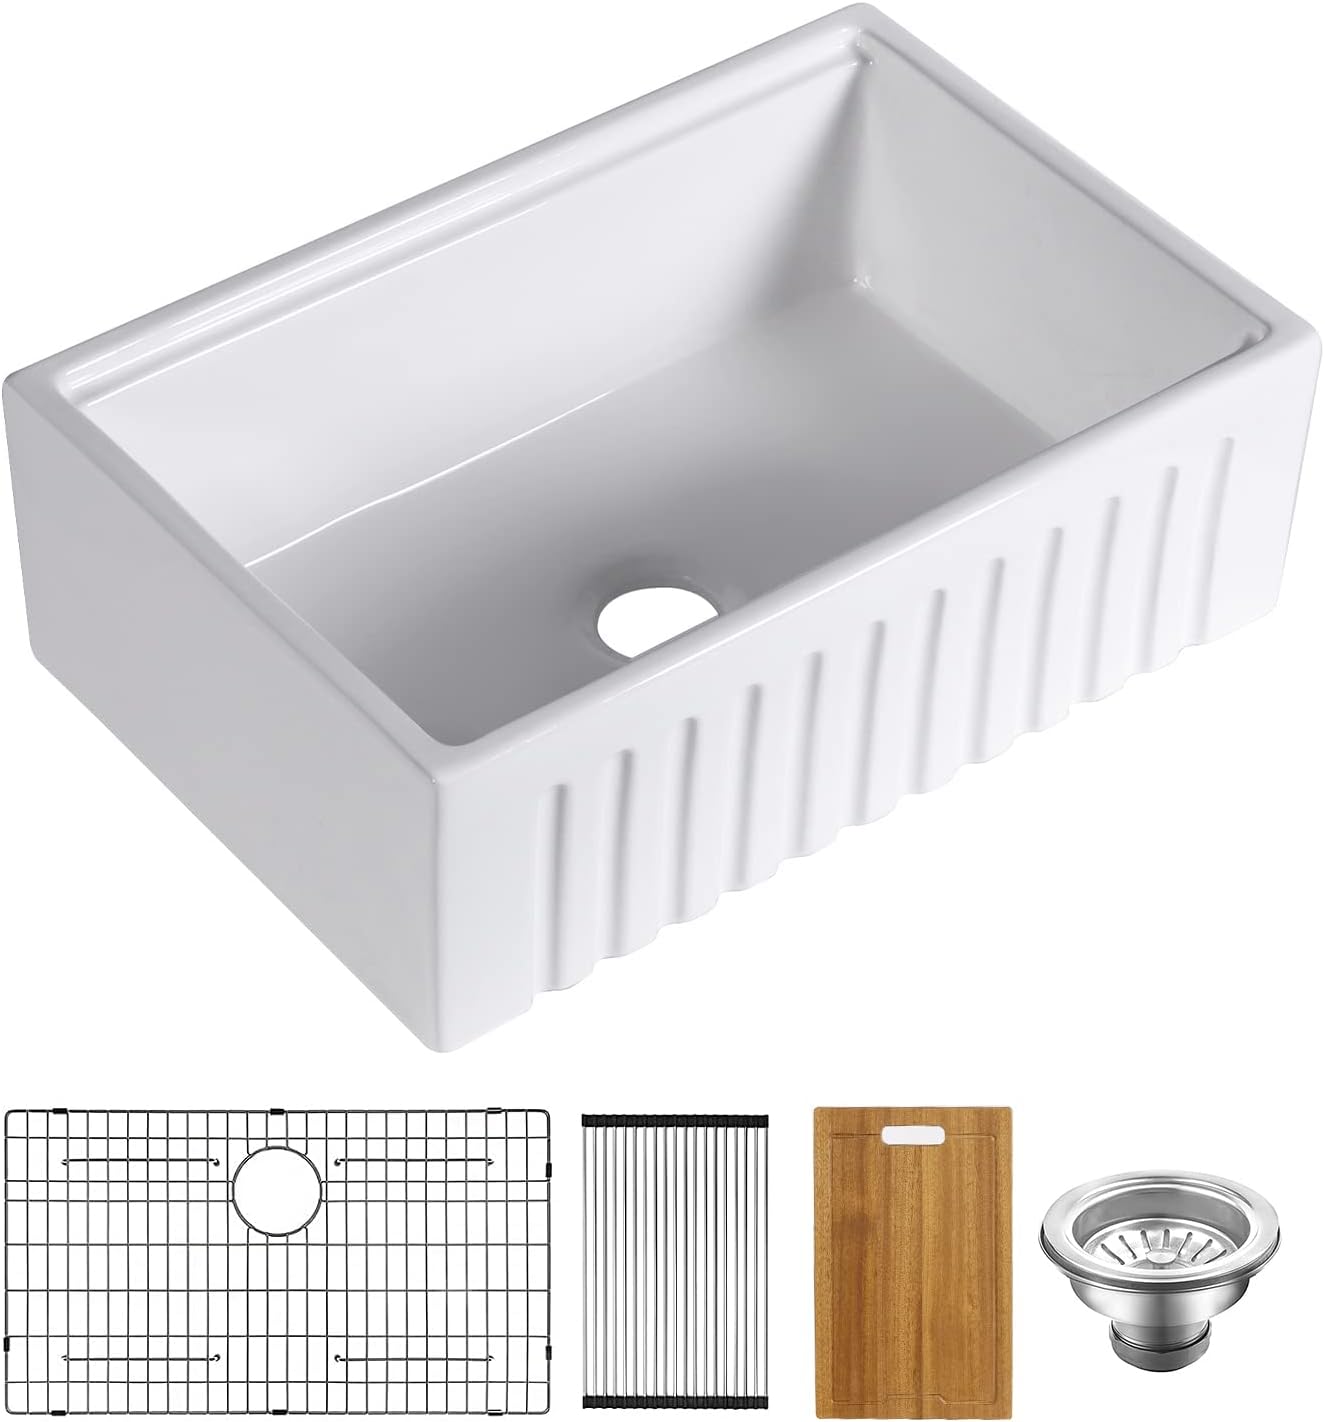 30" x 20" x 10" White Farmhouse Sink, Fireclay Porcelain Single Bowl Apron-Front Workstation Sink, Reversible Ceramic Farm Sink with various